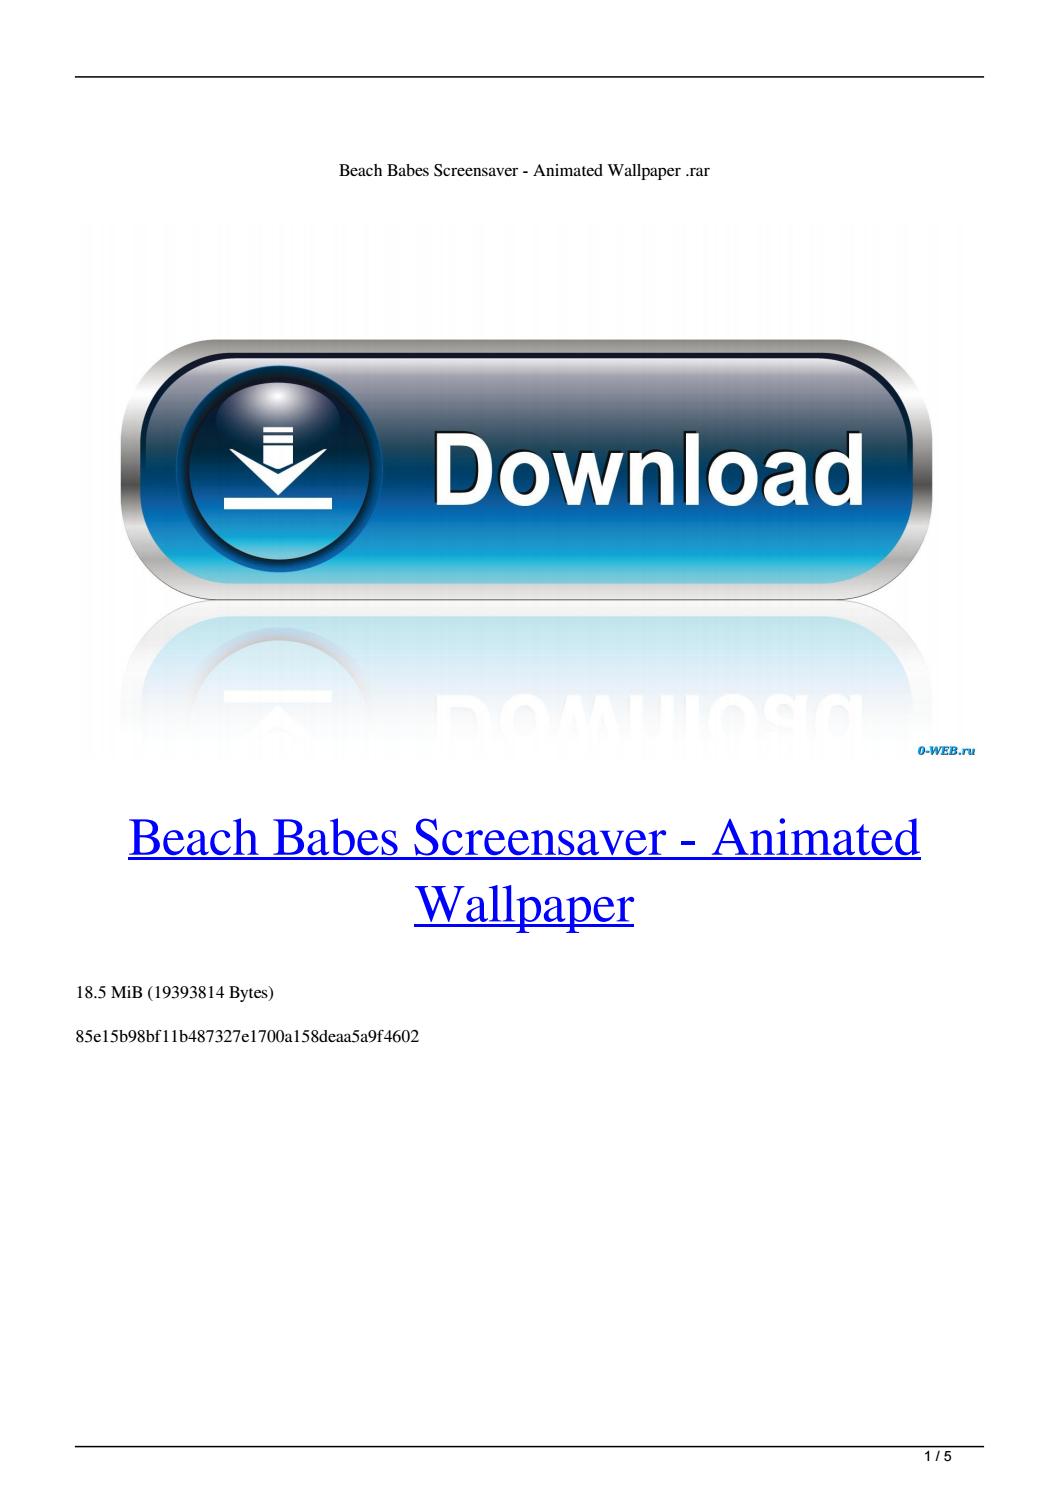 Beach Babes Screensaver Animated Wallpaper Rar By Terfebarla